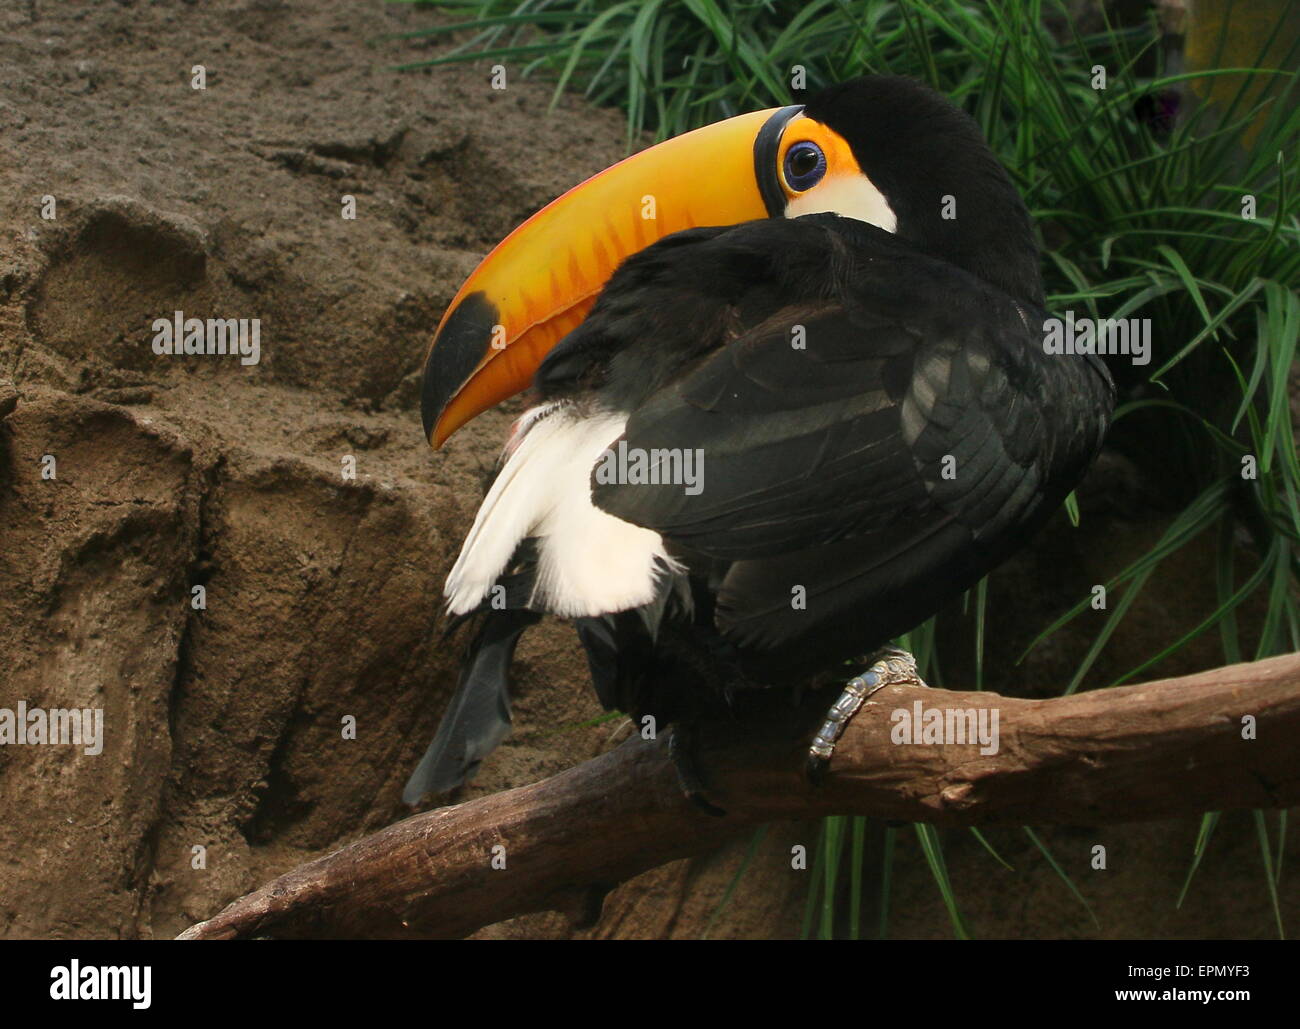 Common or Toco Toucan (Ramphastos toco), native to South America Stock Photo